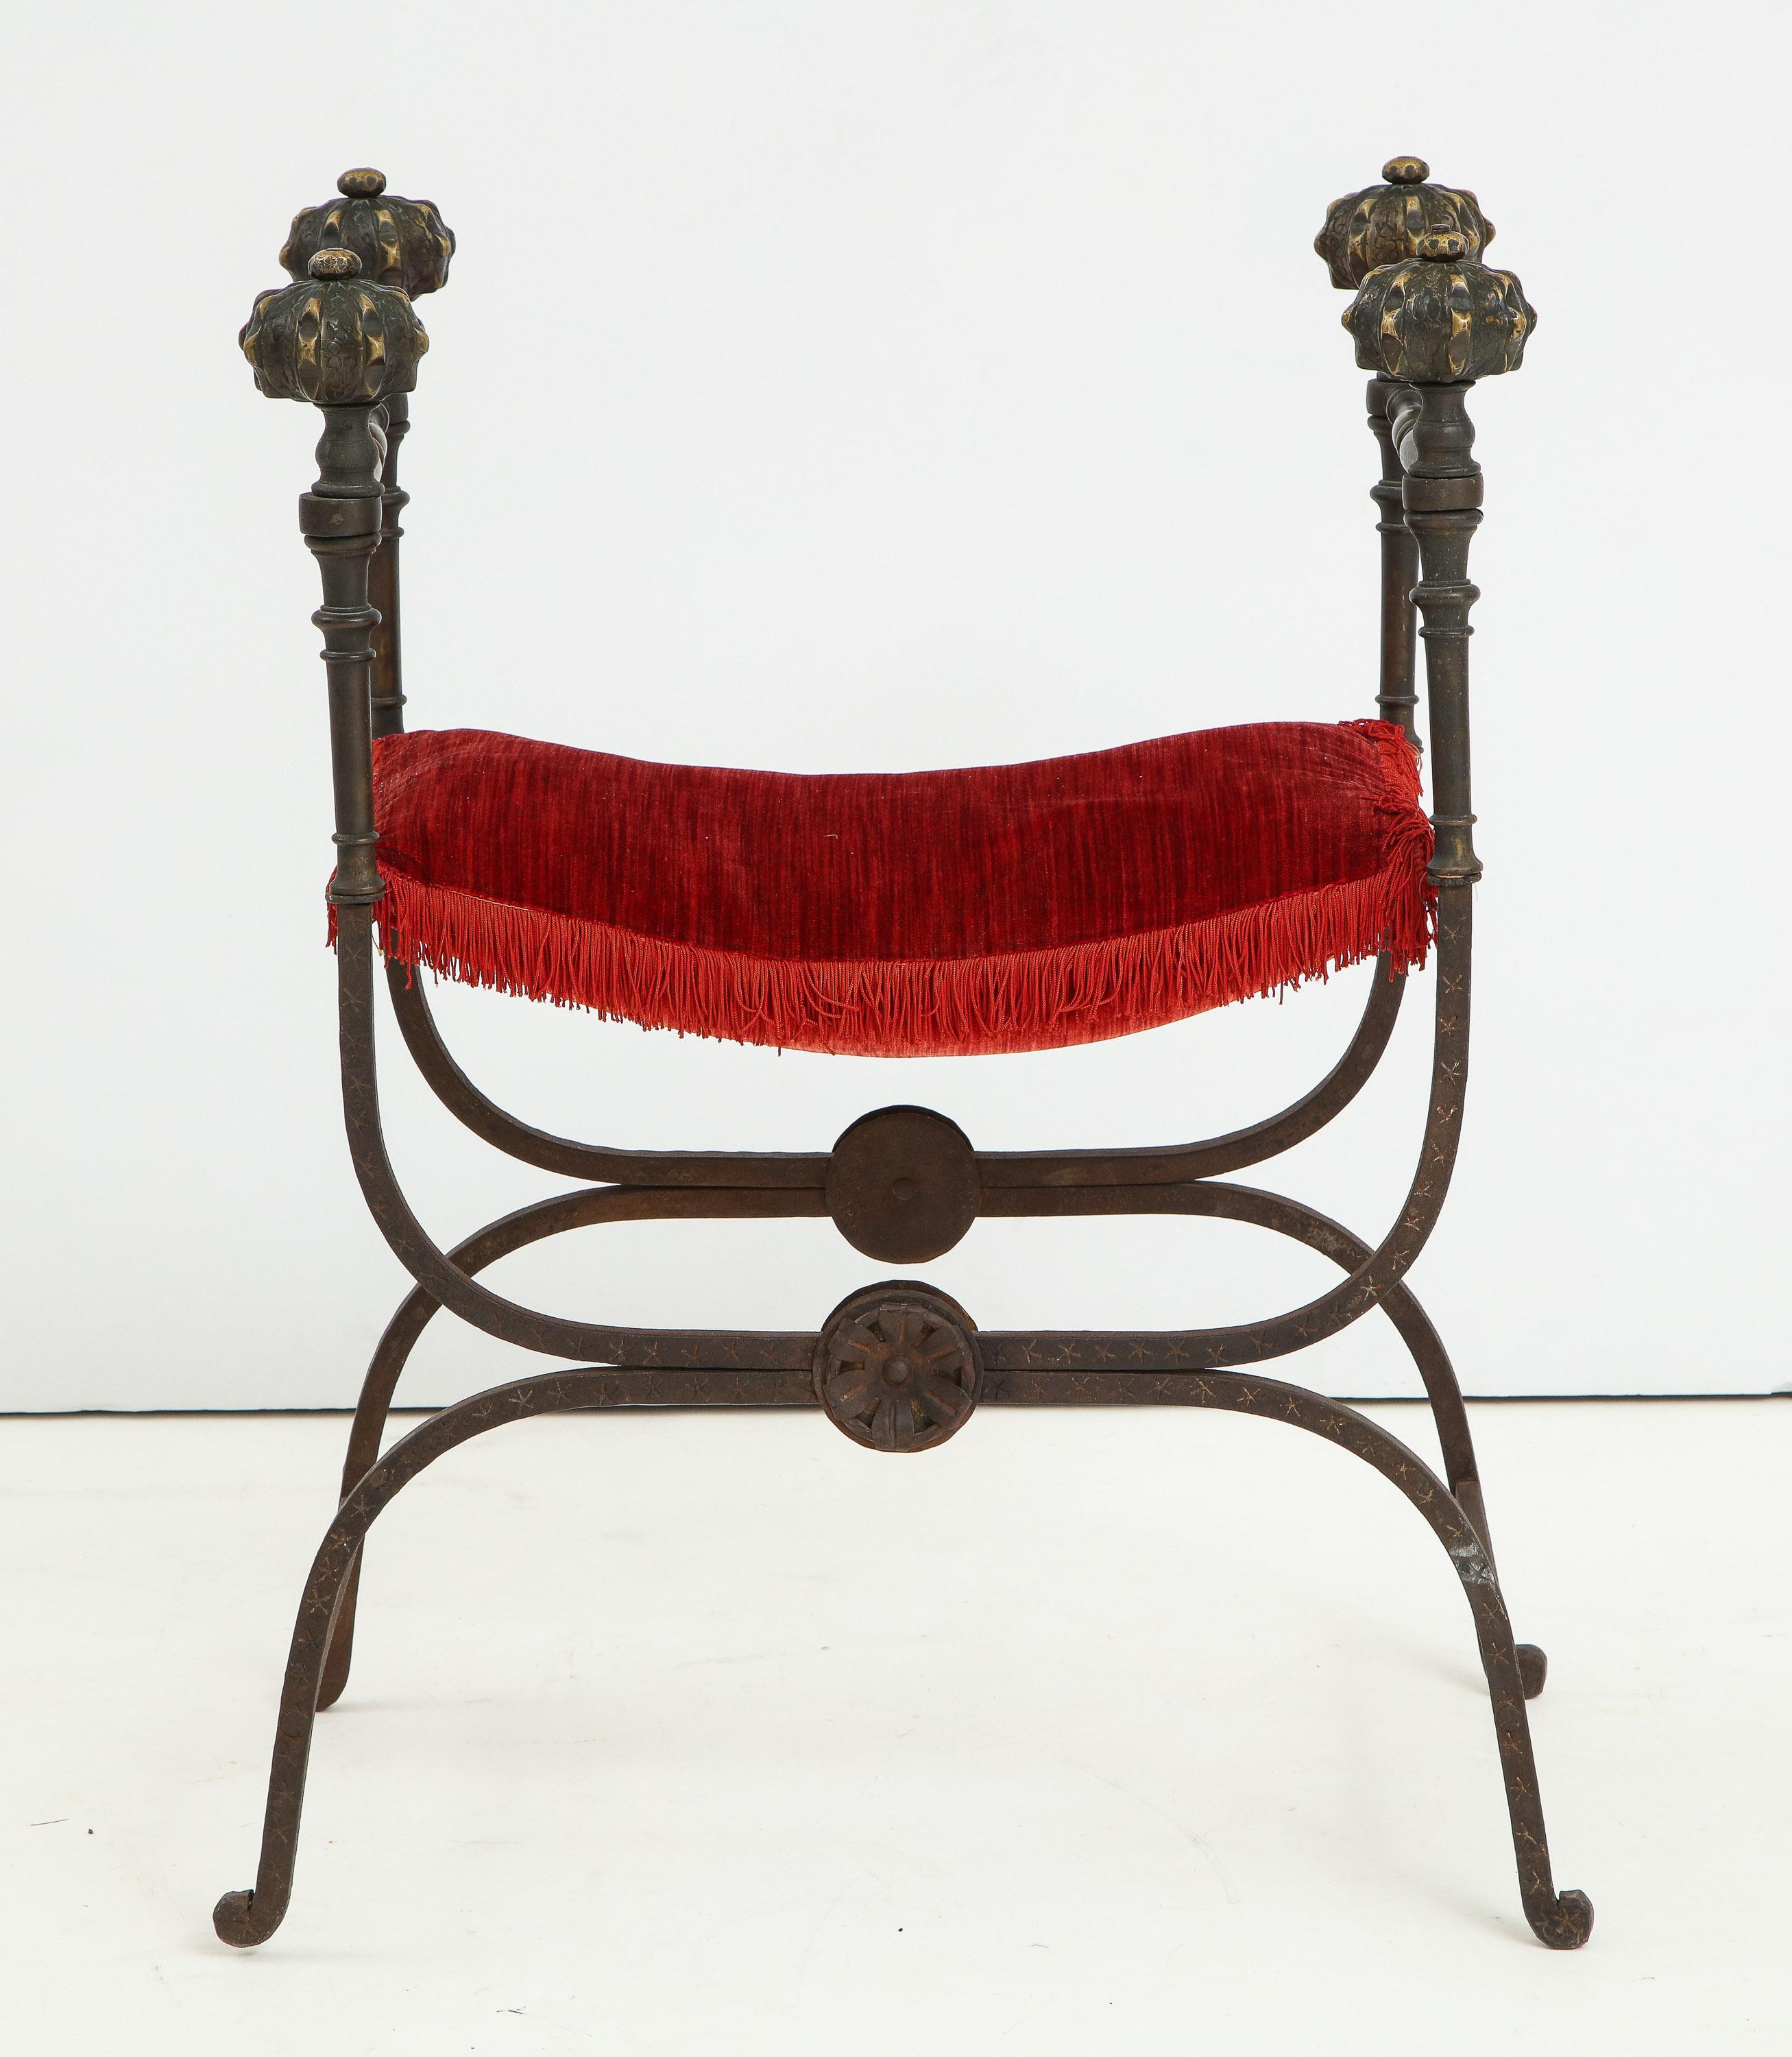 Italian Baroque iron folding seat (Faldistorio) with pomegranate bronze finials and turned bronze shafts, the 